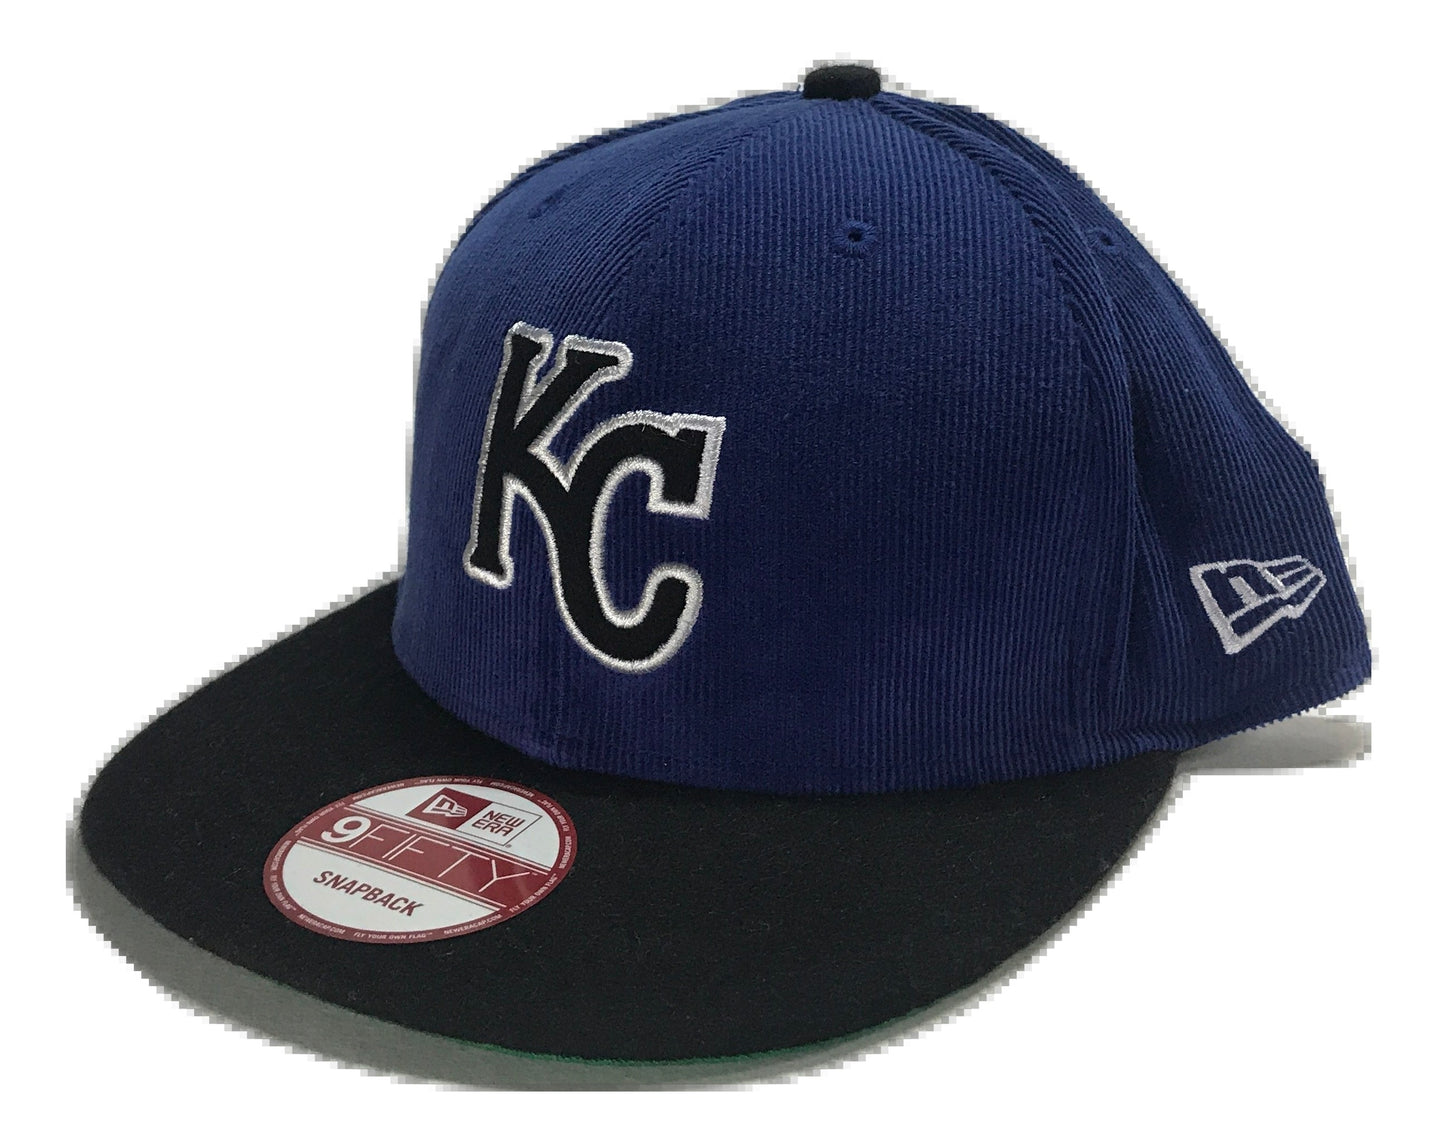 Kansas City Royals (Blue) Snapback